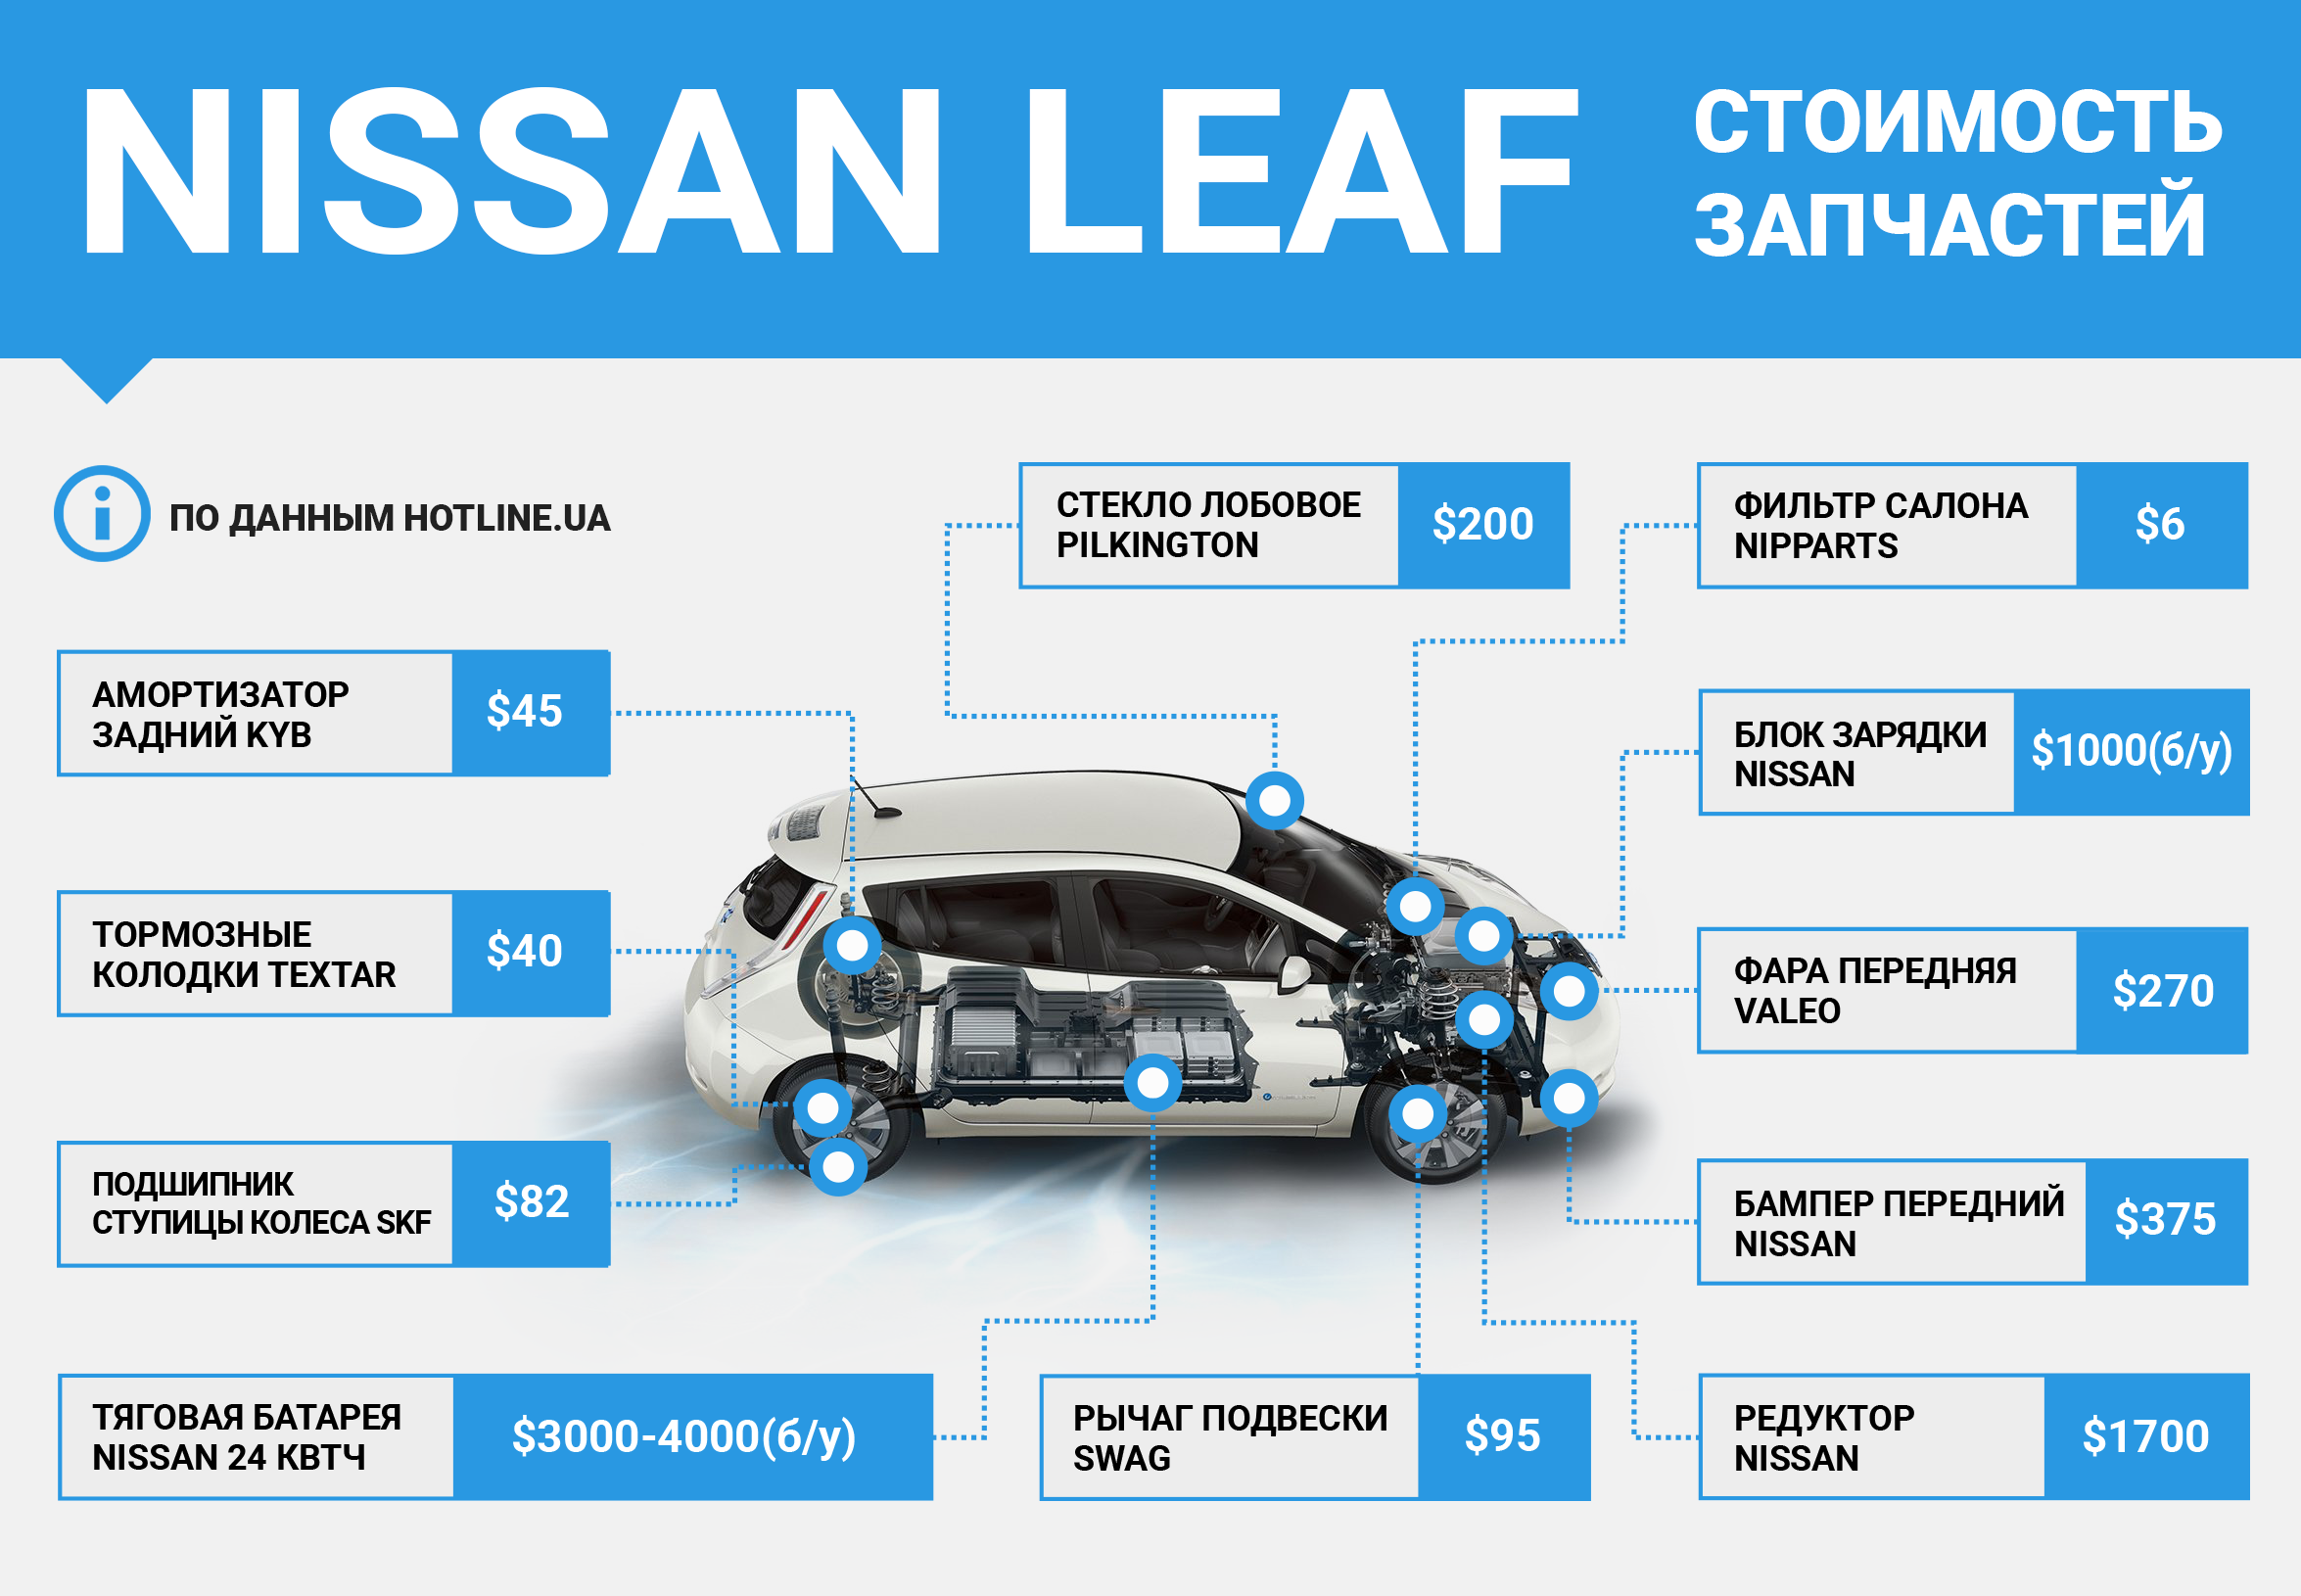 Автомобиль ниссан характеристики. Батарея электромобиля Nissan Leaf. Конструкция электромобиля Nissan Leaf. Устройство электромобиля Ниссан лиф. Электромобиль Ниссан Leaf аккумулятор.